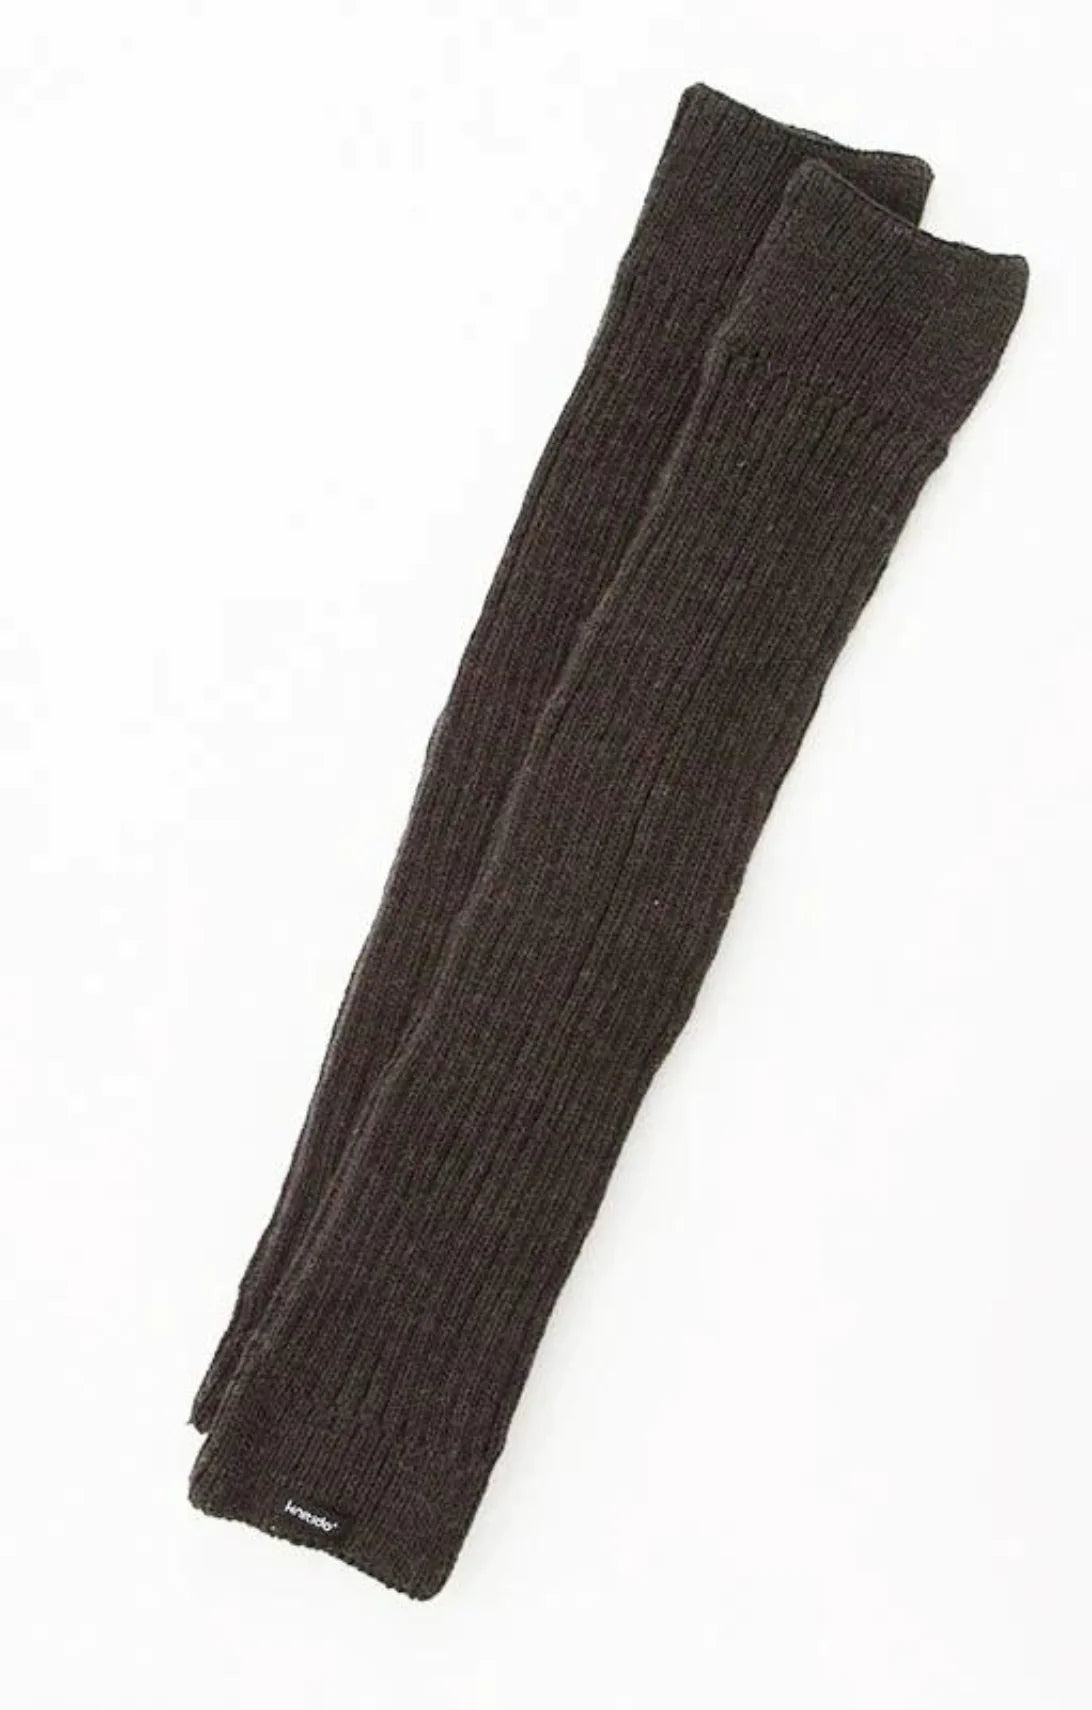 Knitido plus brand Wool Blend Ribbed Leg Warmer in Dark Grey color